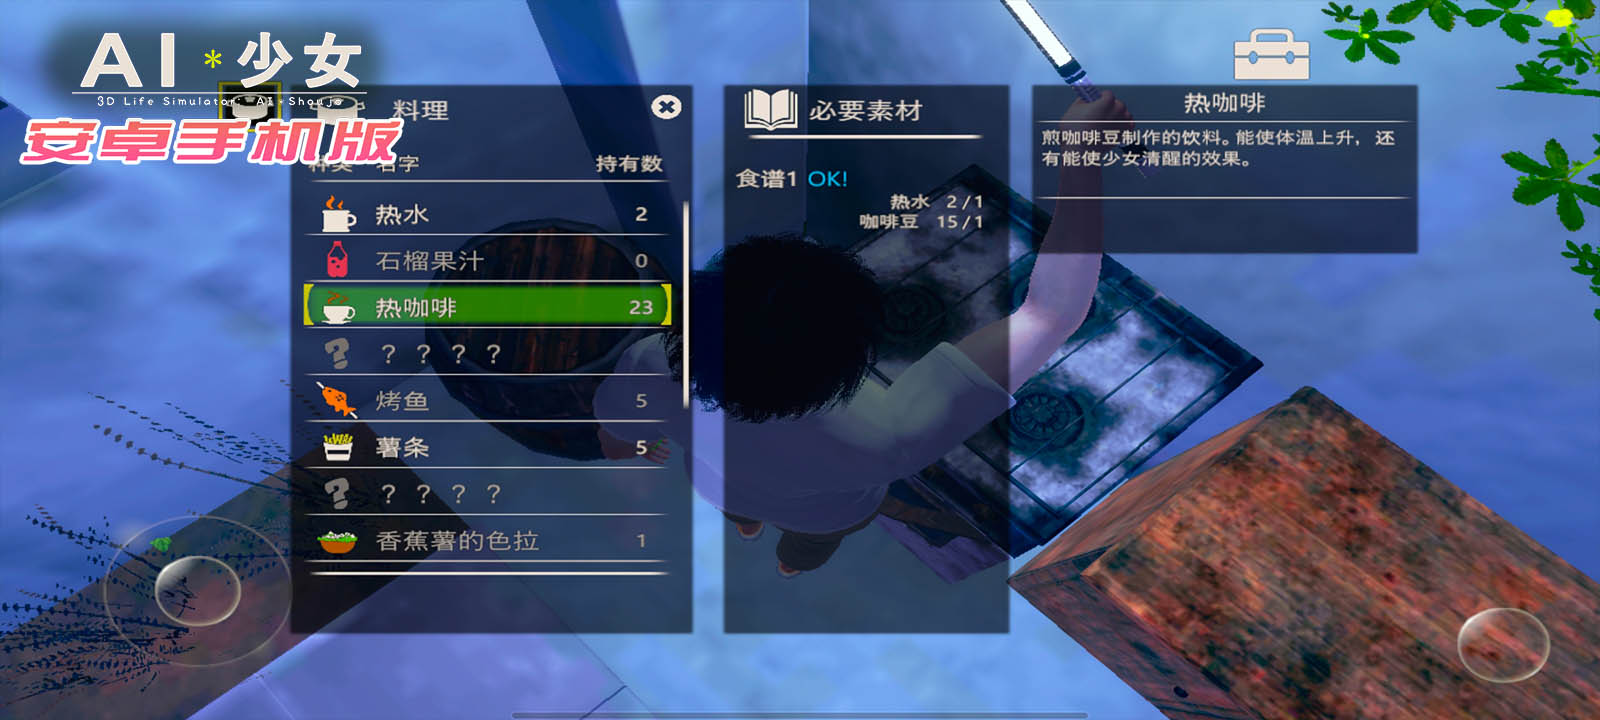 【I社大作】AI少女安卓版全DLC简体中文无码